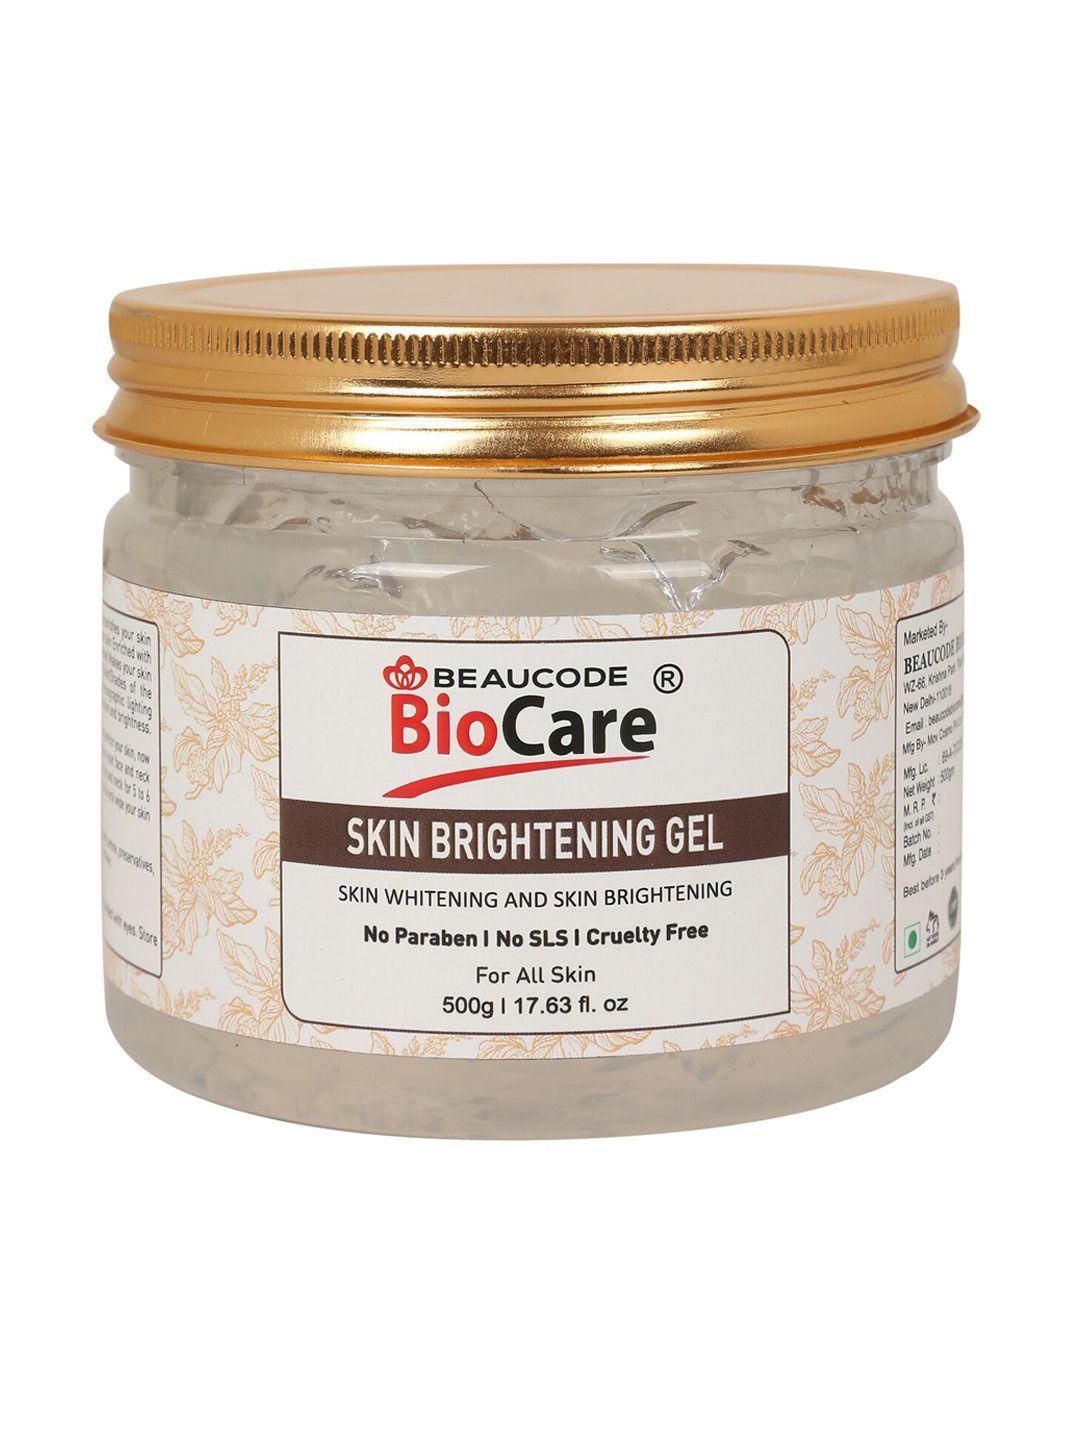 beaucode biocare skin brightening gel for all skin types - 500 g